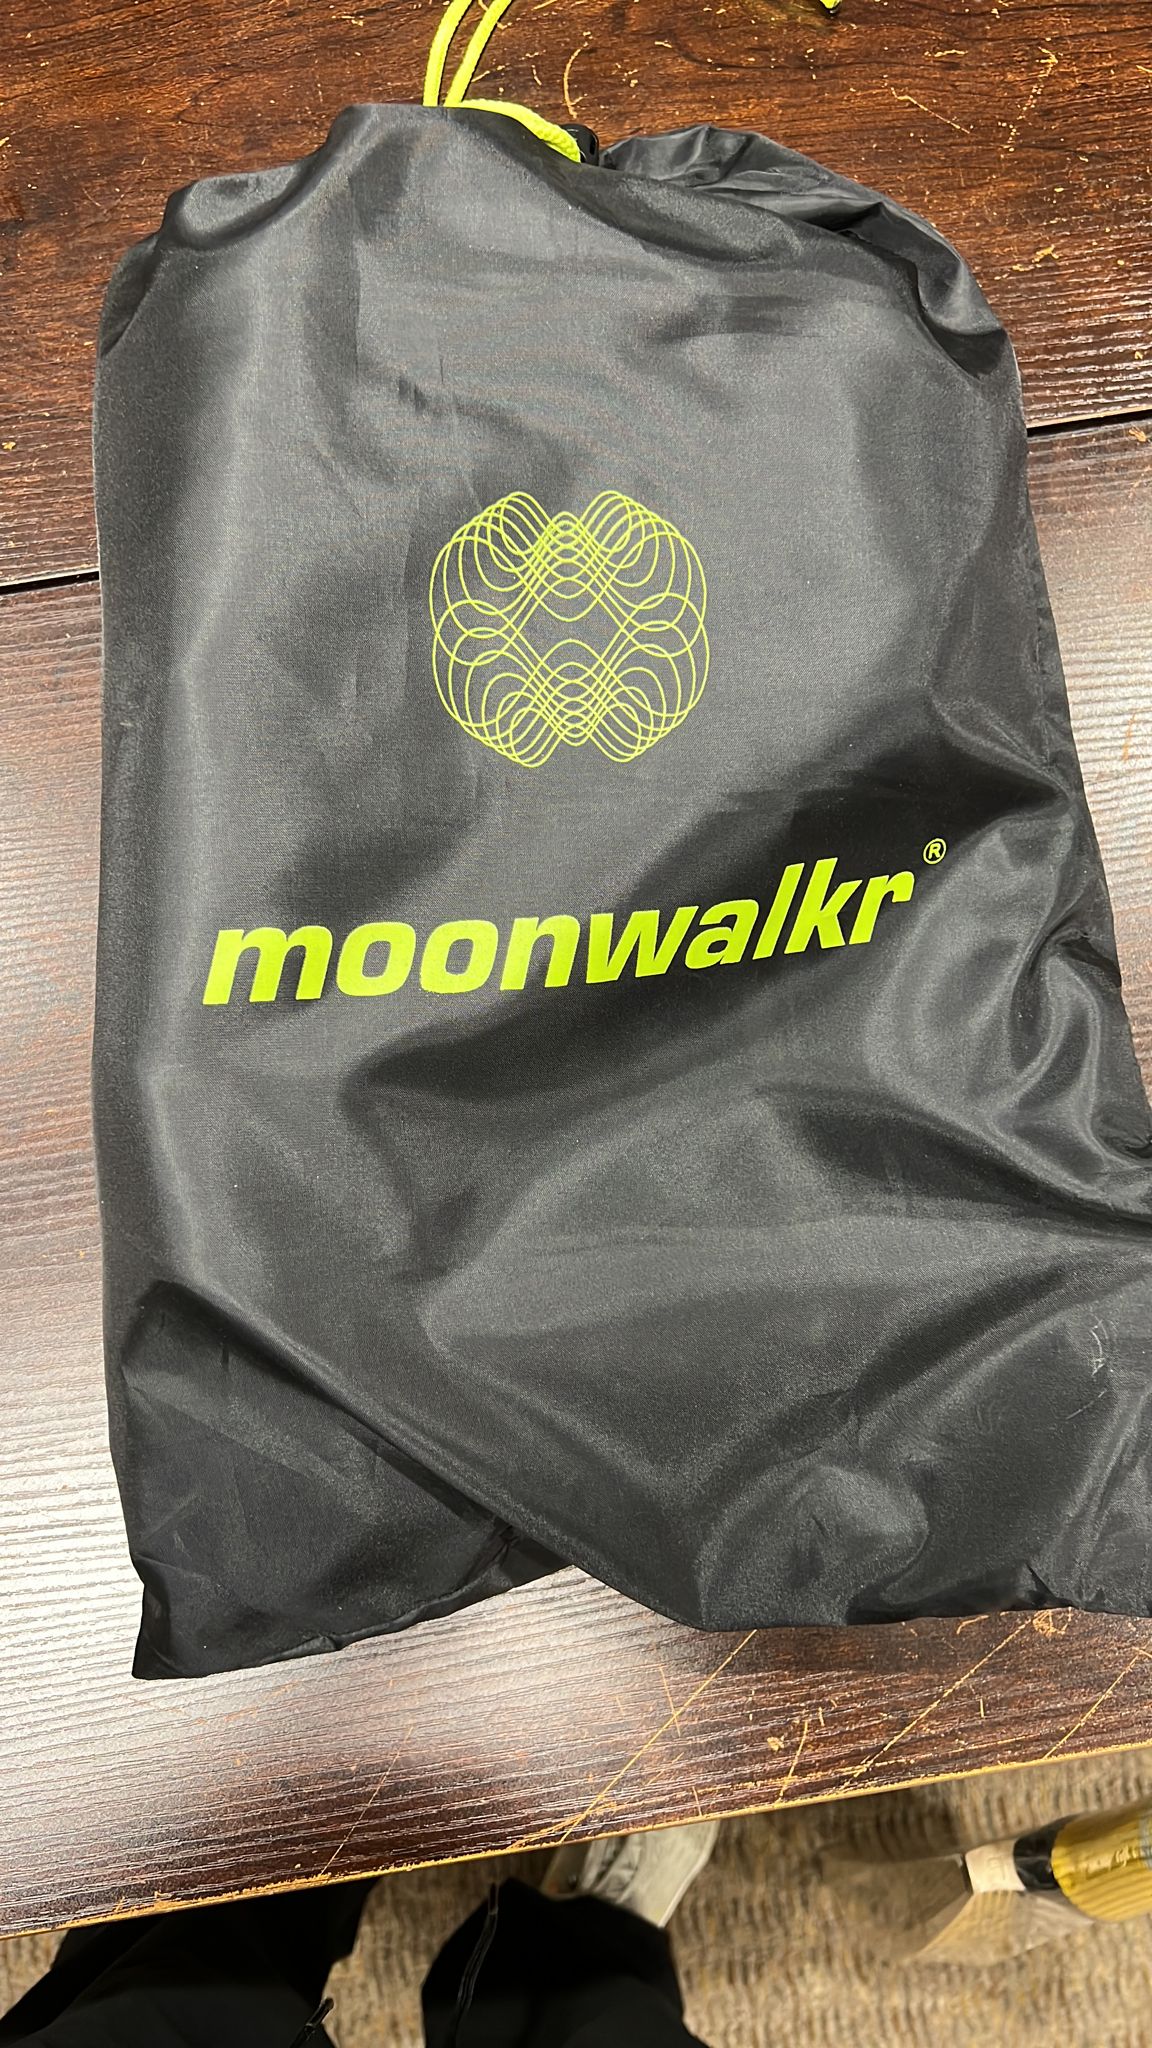 Moonwalkr Double Thigh Pads/Guard, Green, M,L